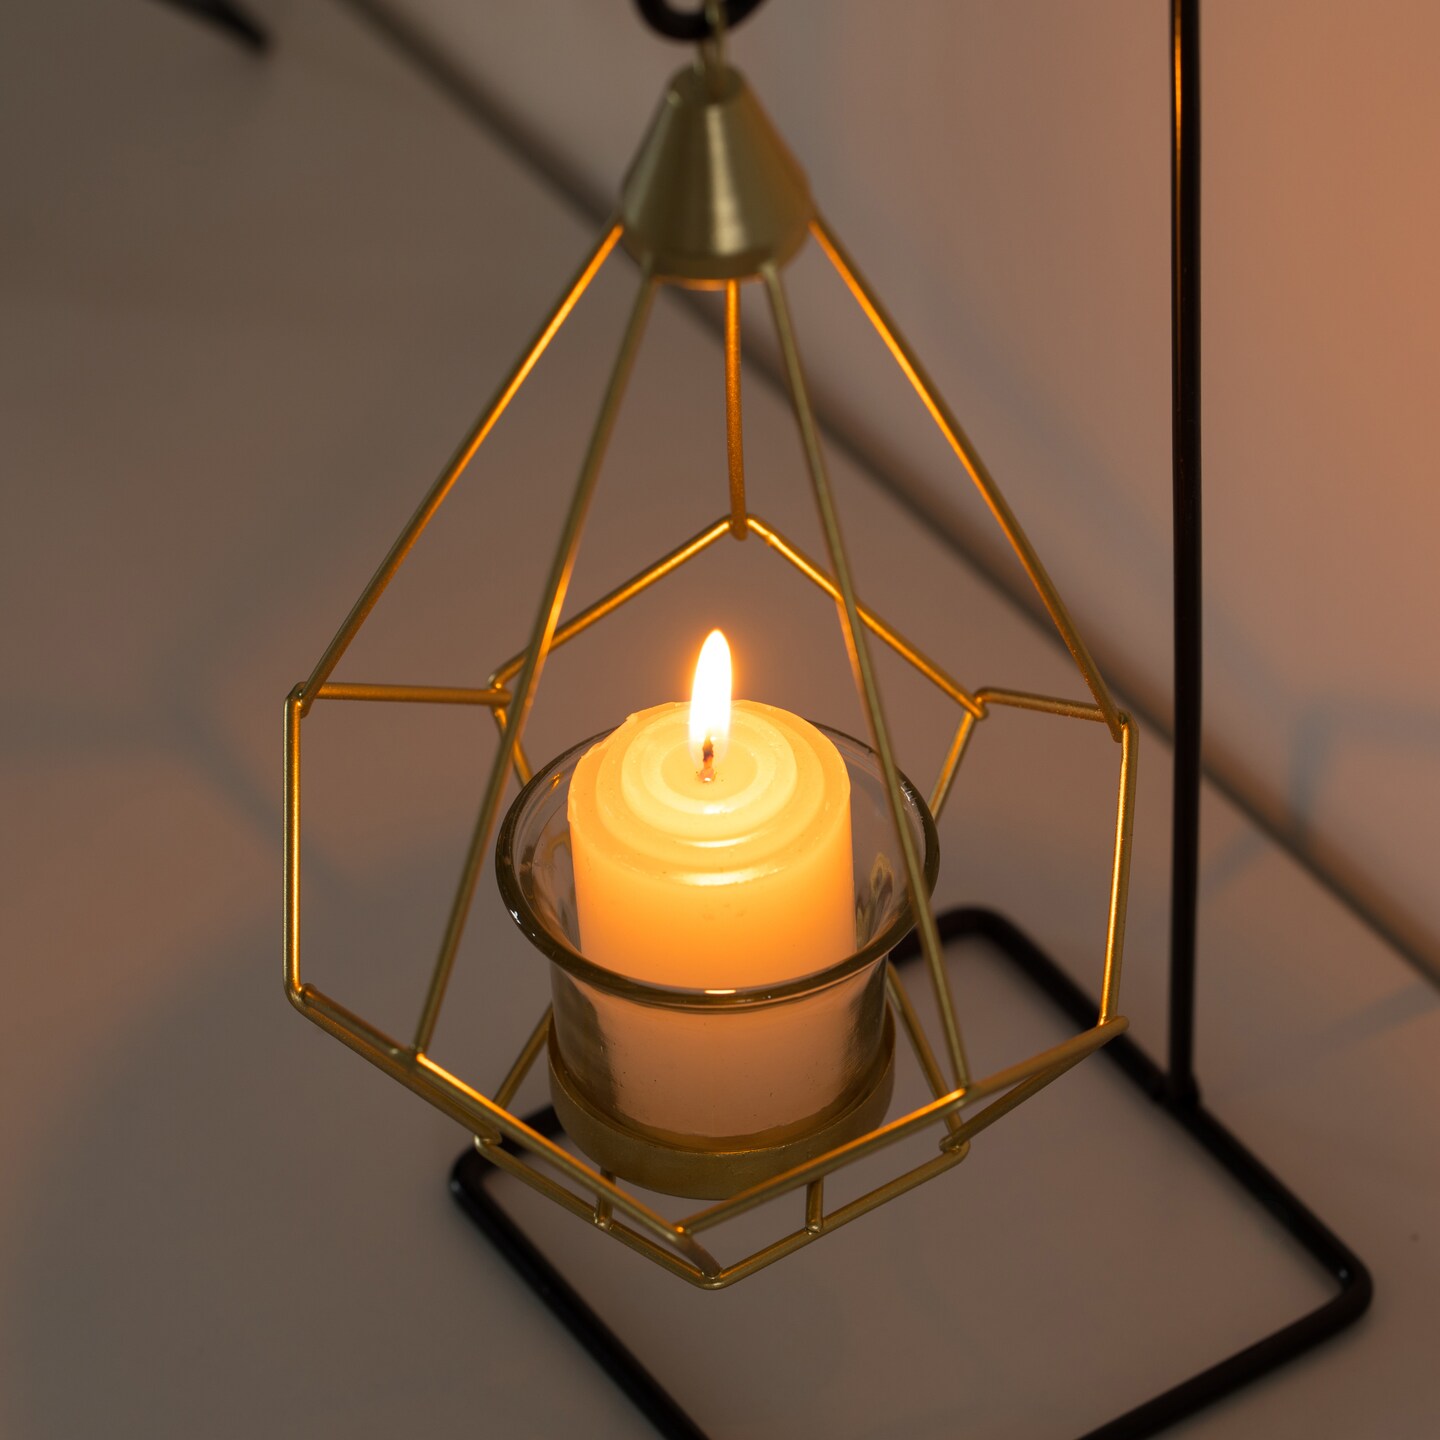 Fabulaxe QI004337 Geometric Framed Swinging Votive Candle Holder Decorative Modern Hanging Lantern Tabletop Centerpiece, Gold